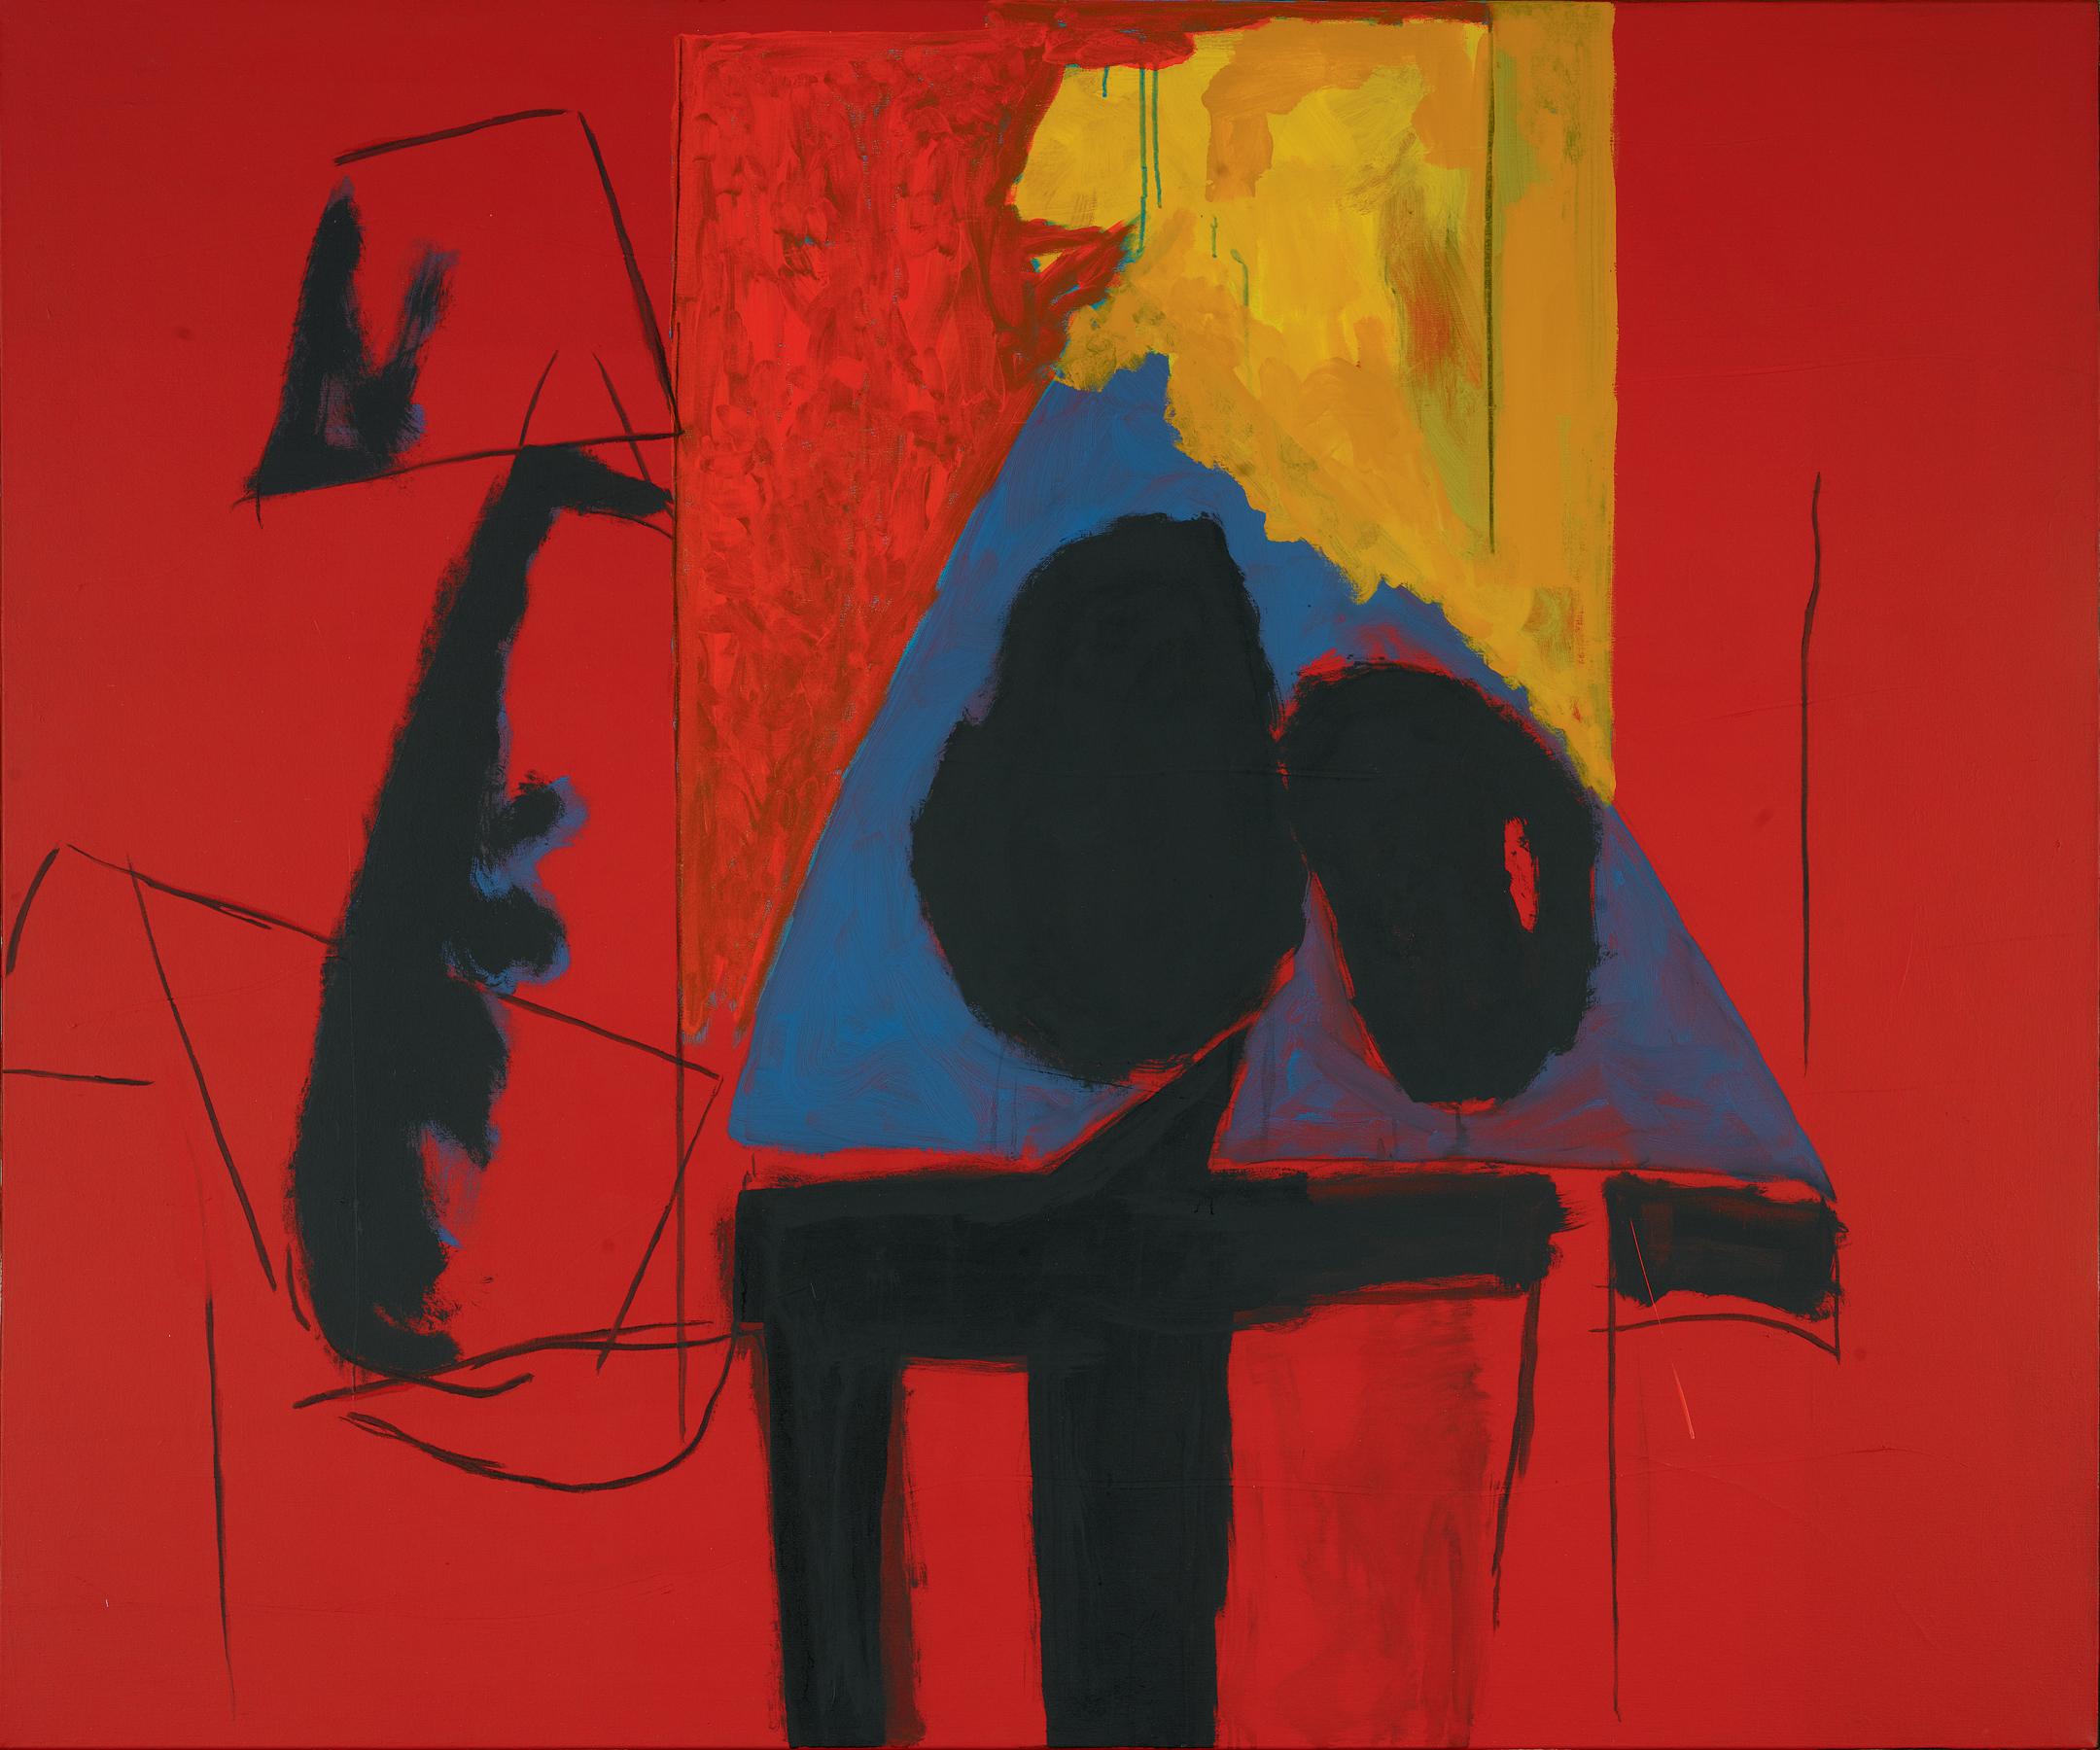 Abstract Painting Robert Motherwell - The Studio